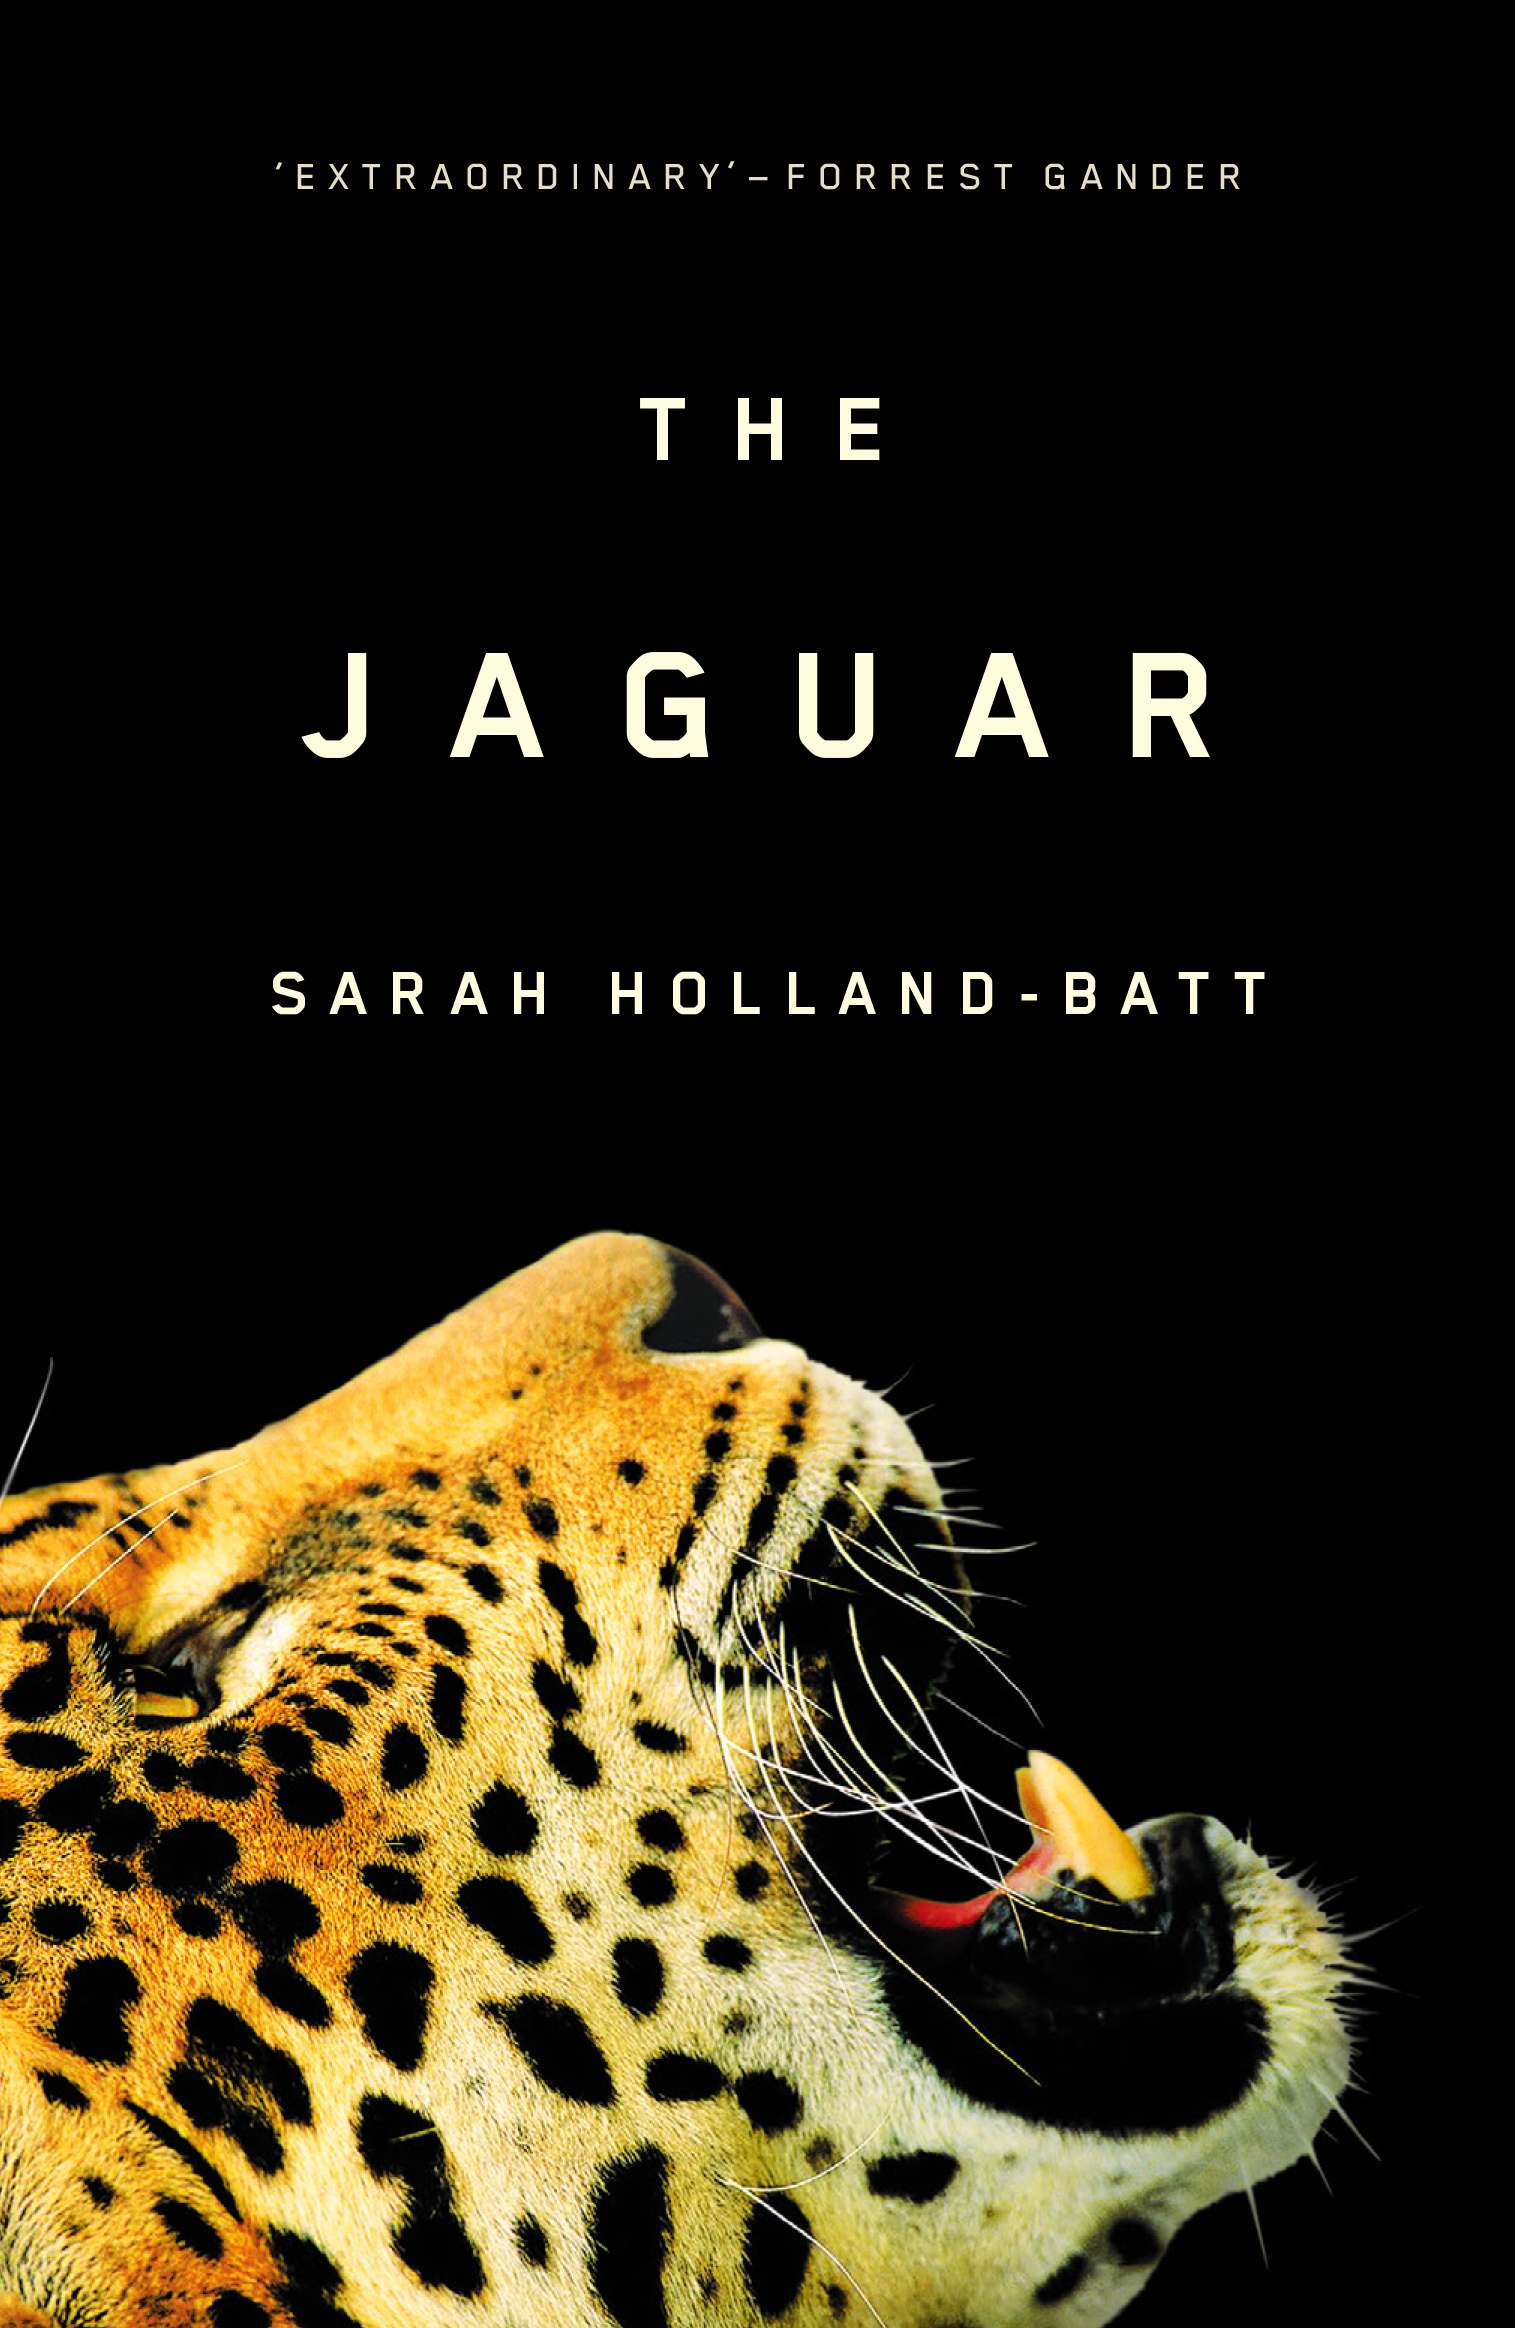 The Jaguar by Sarah Holland-Batt